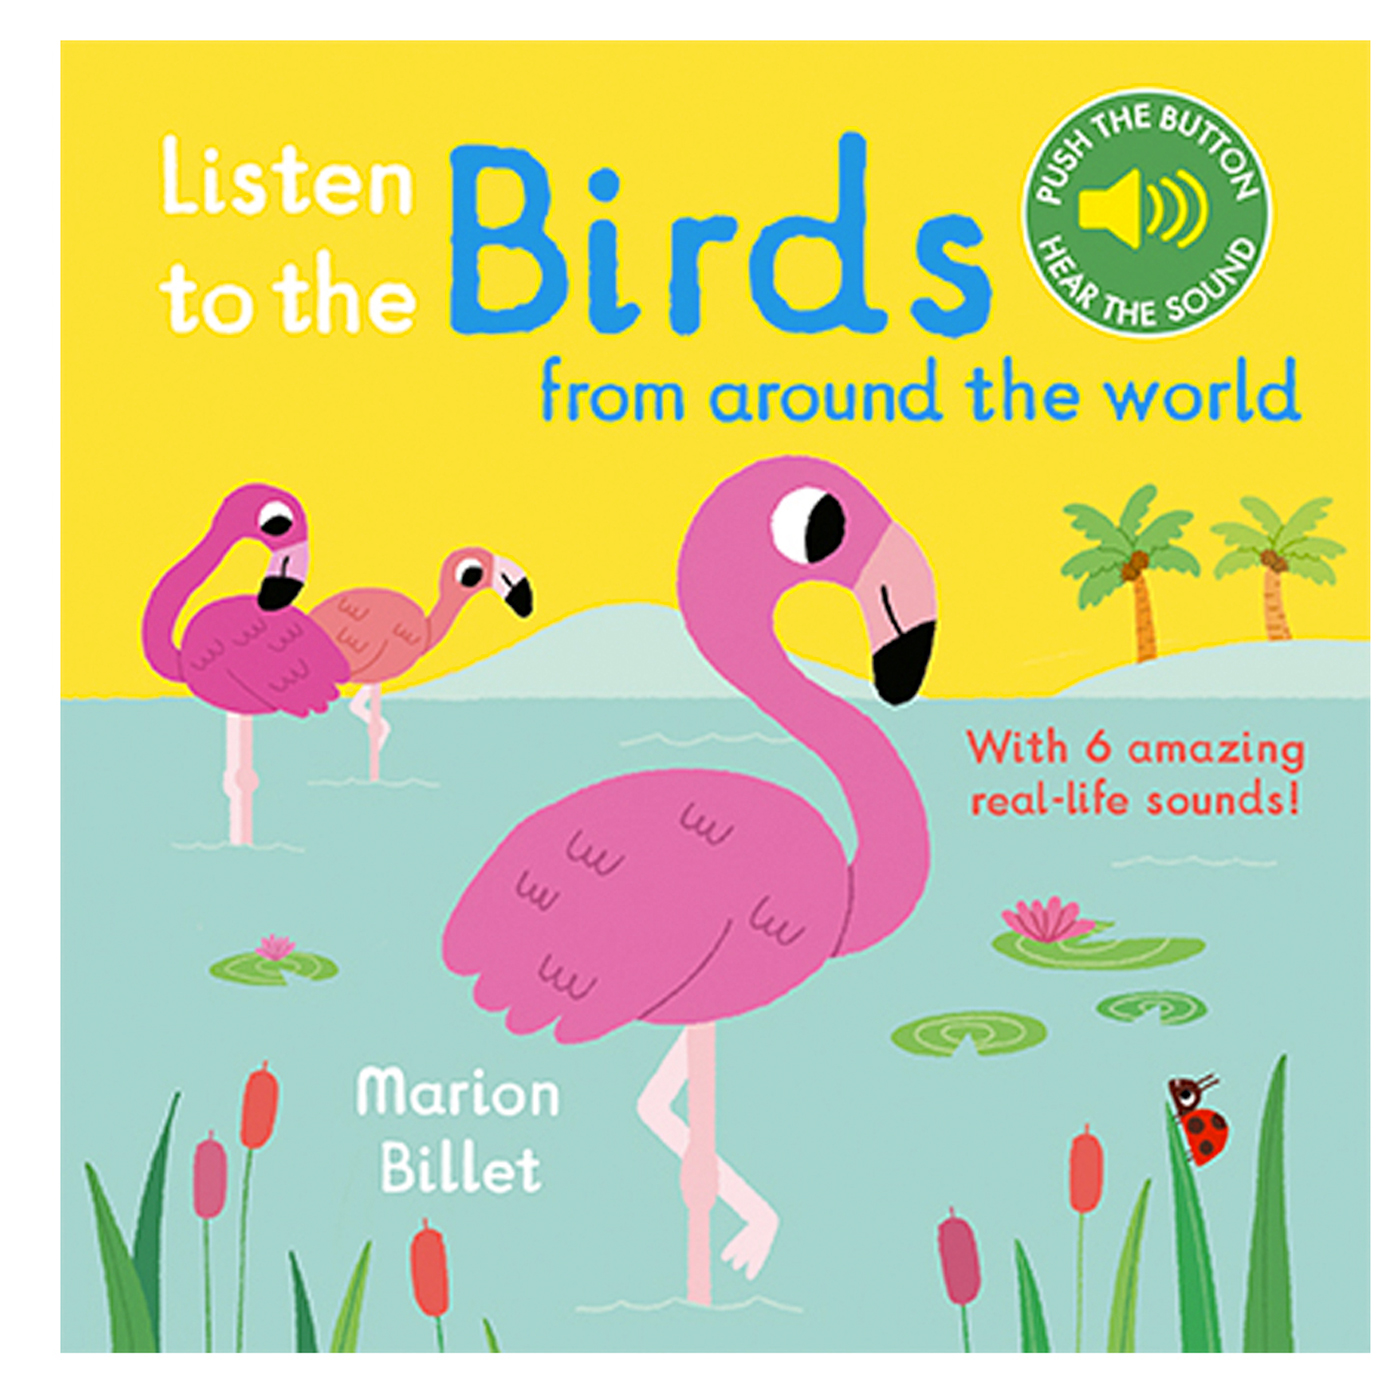  Listen to the: Birds from around the world